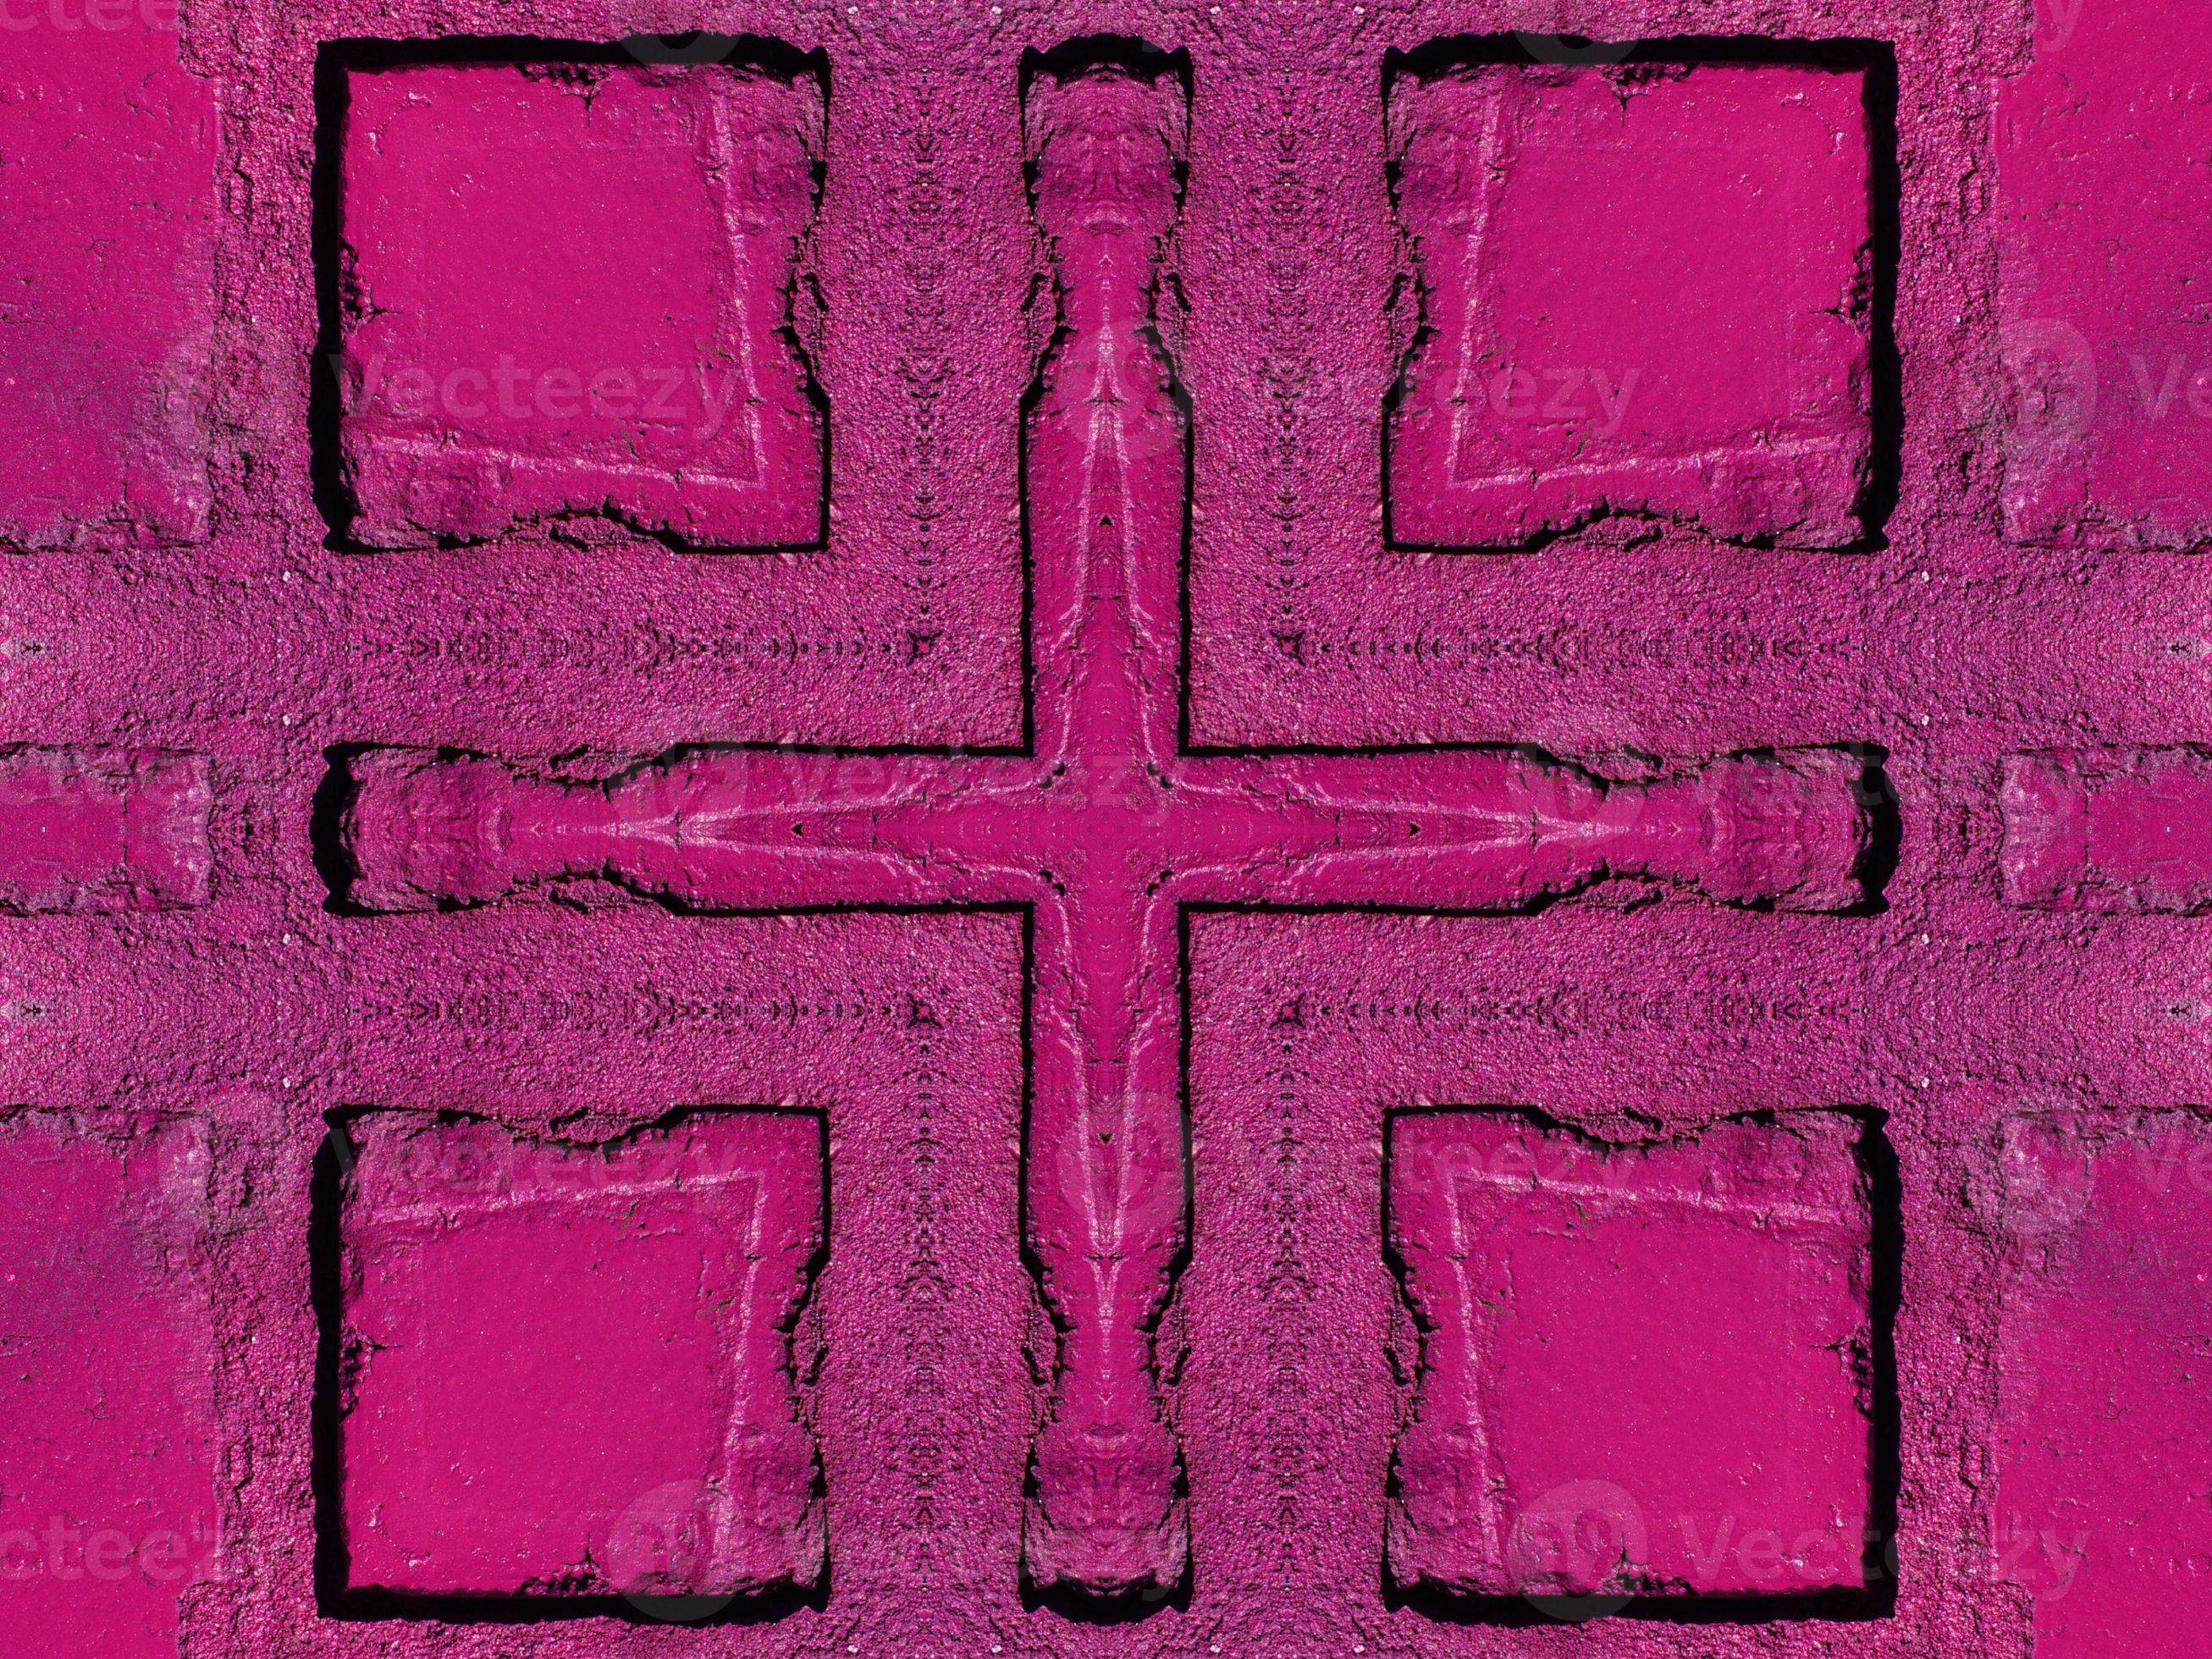  Magenta Hintergrundbild 2613x1960. Magenta brick wall kaleidoscope pattern abstract unique symmetric and aesthetic background